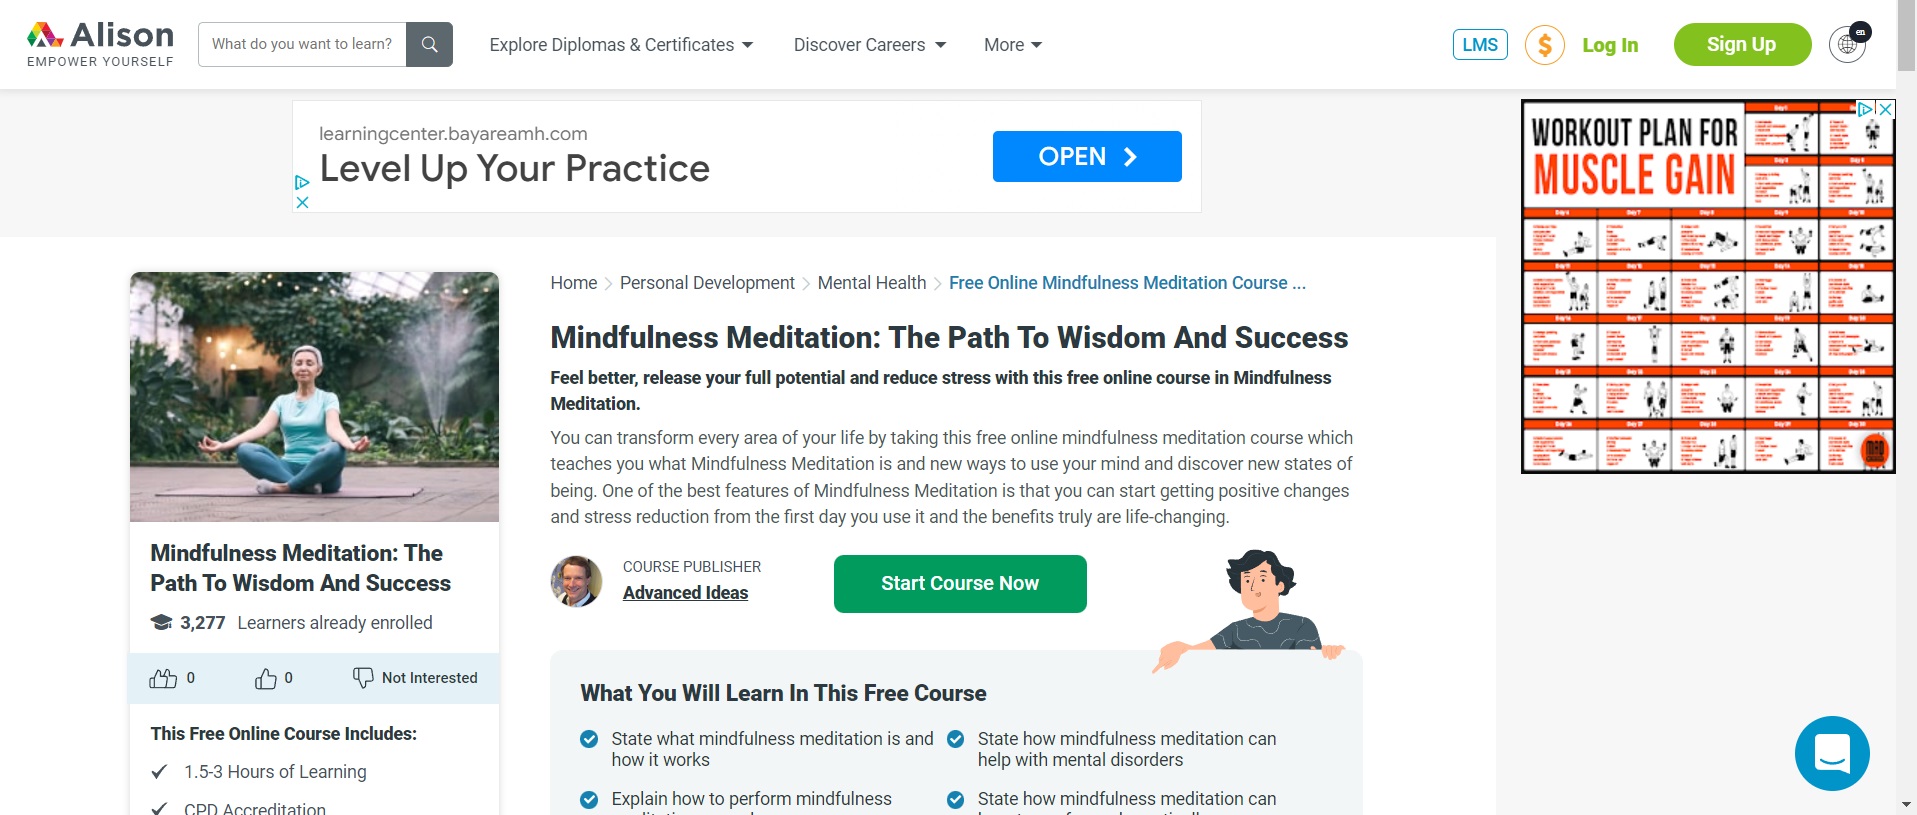 Mindfulness Meditation The Path To Wisdom And Success